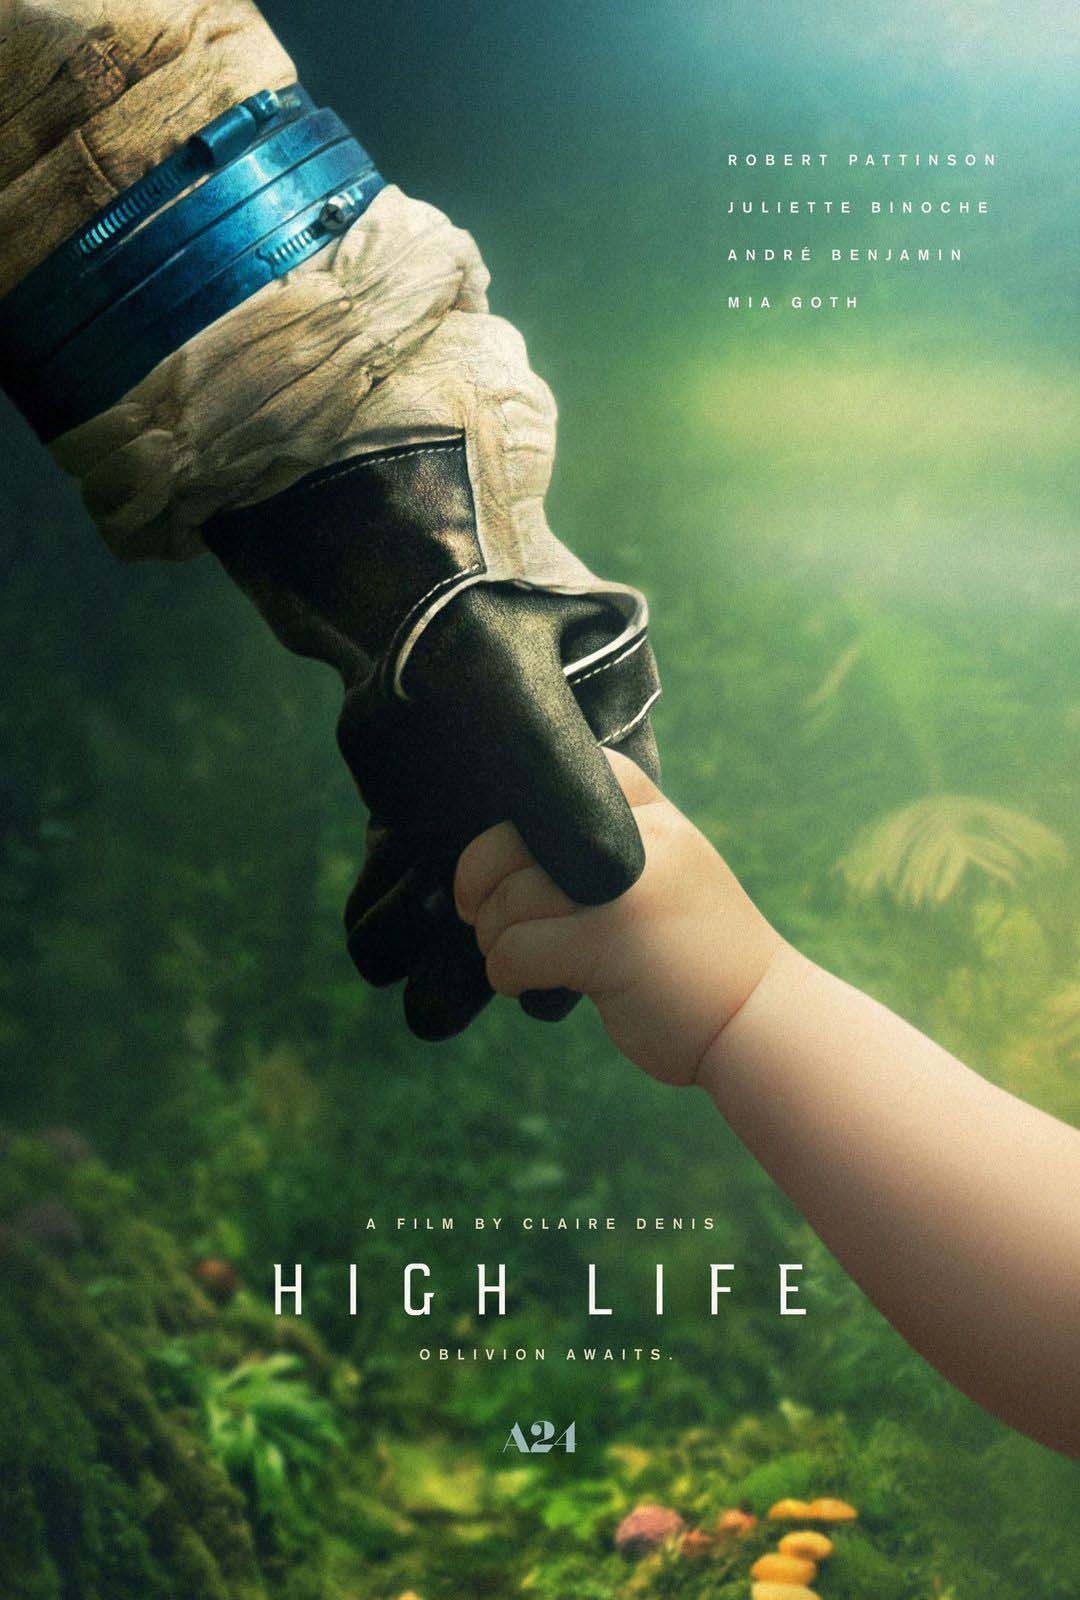 High Life 2019 Full Movie Free Online